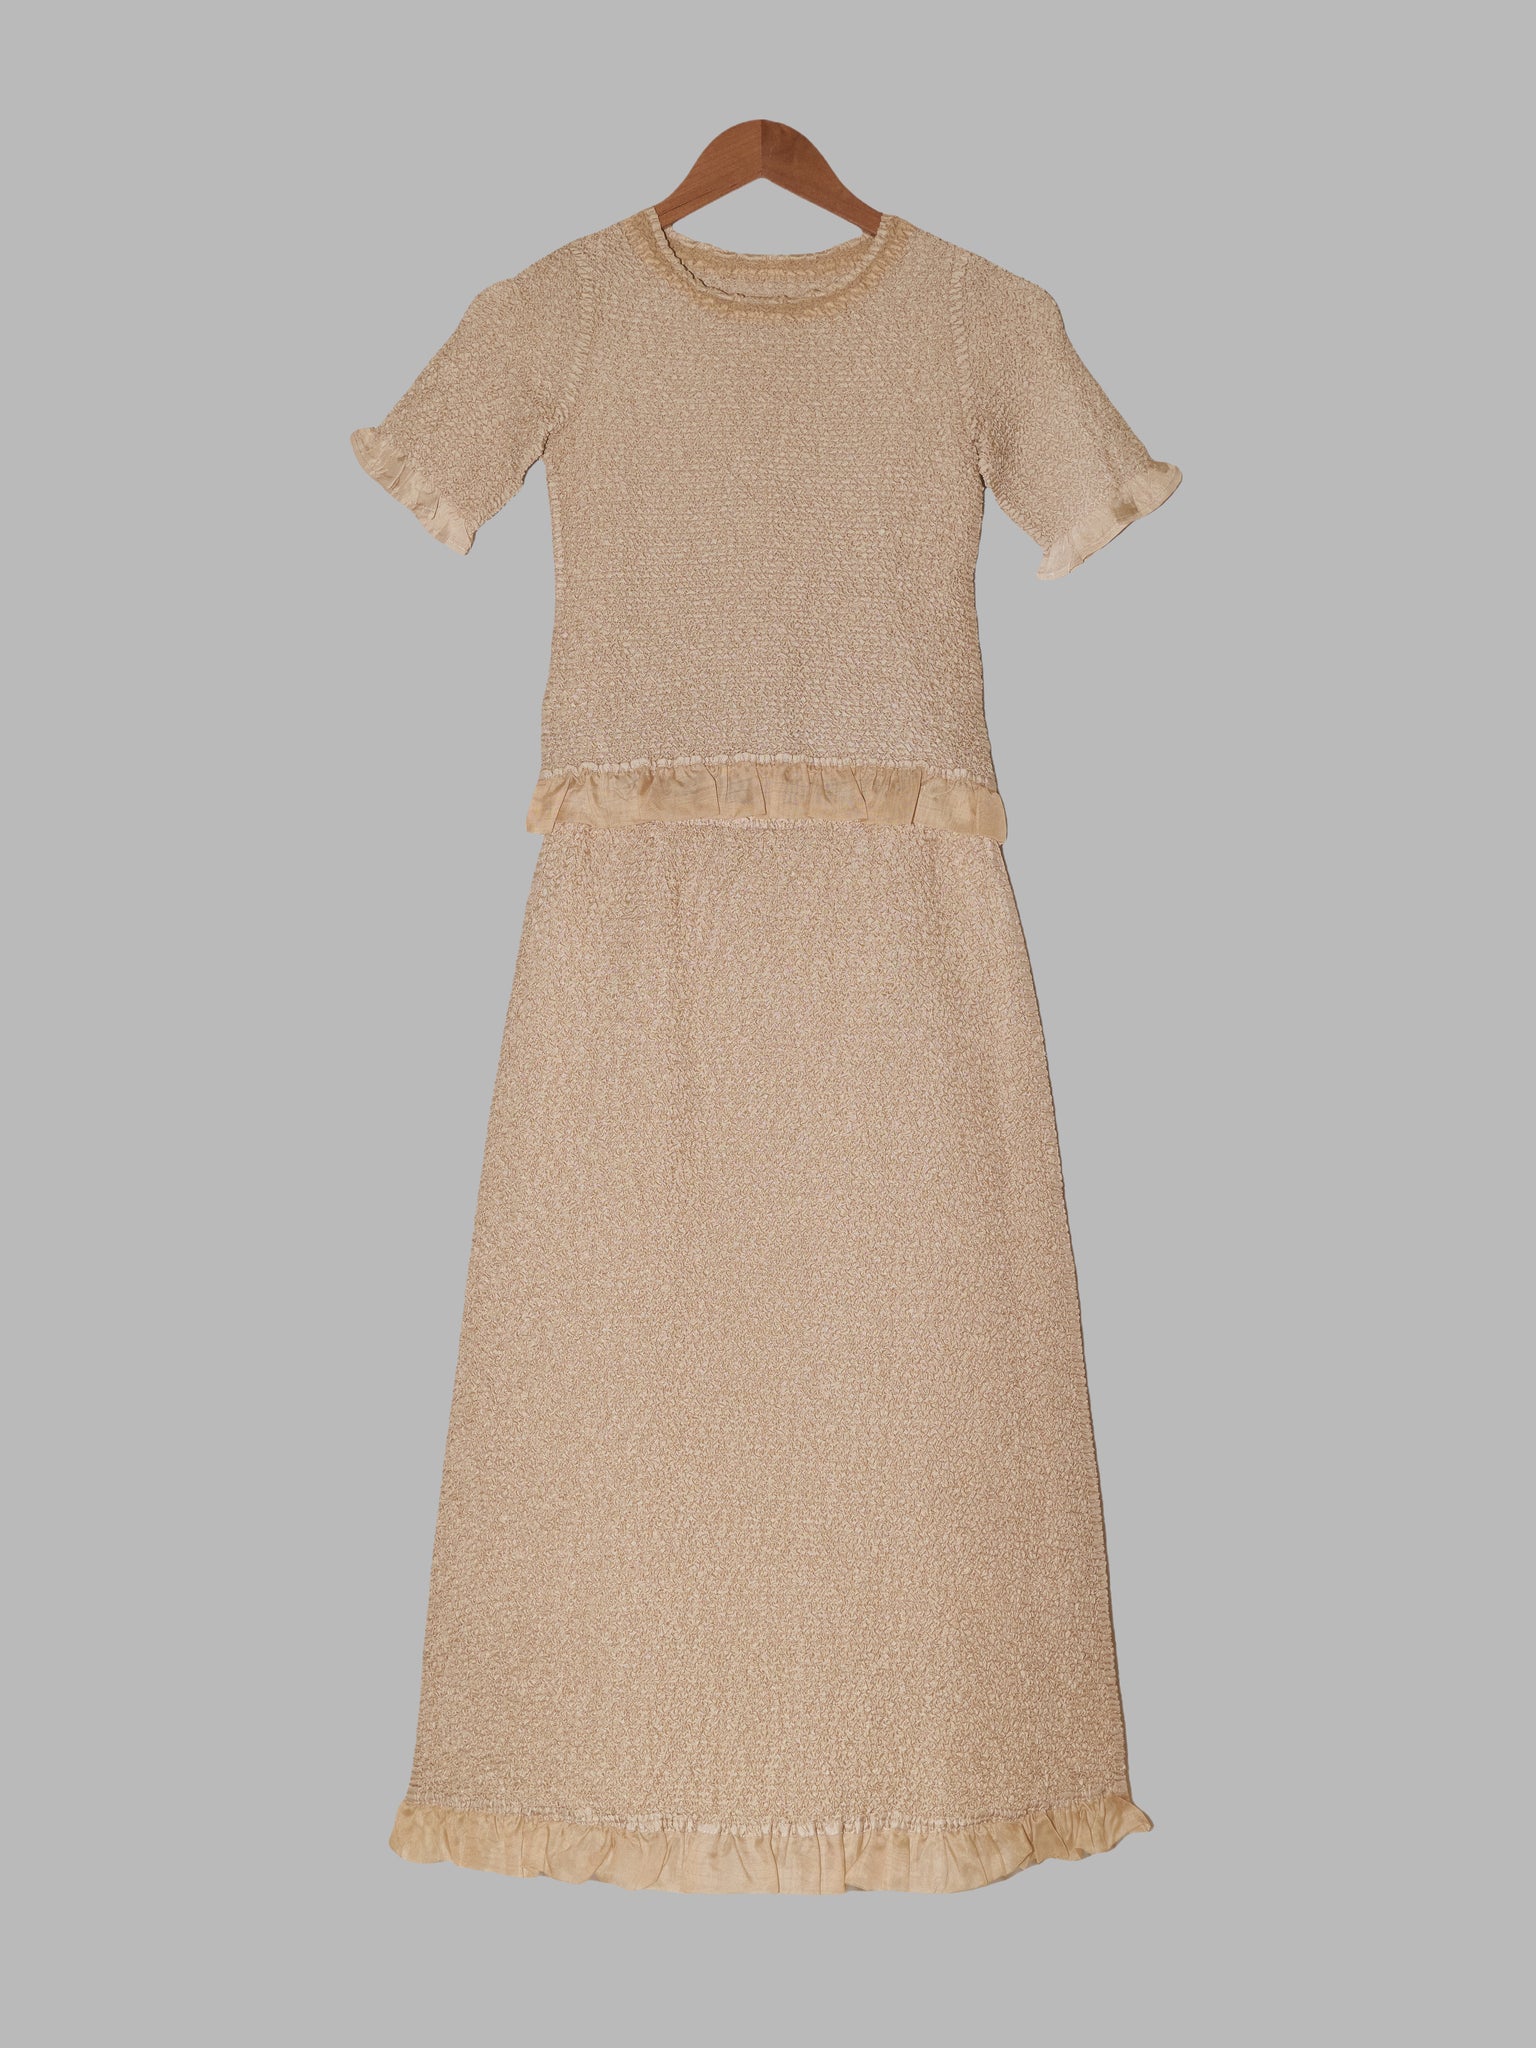 Yoshiki Hishinuma Peplum gold wrinkled polyester top and skirt set - 2 M S